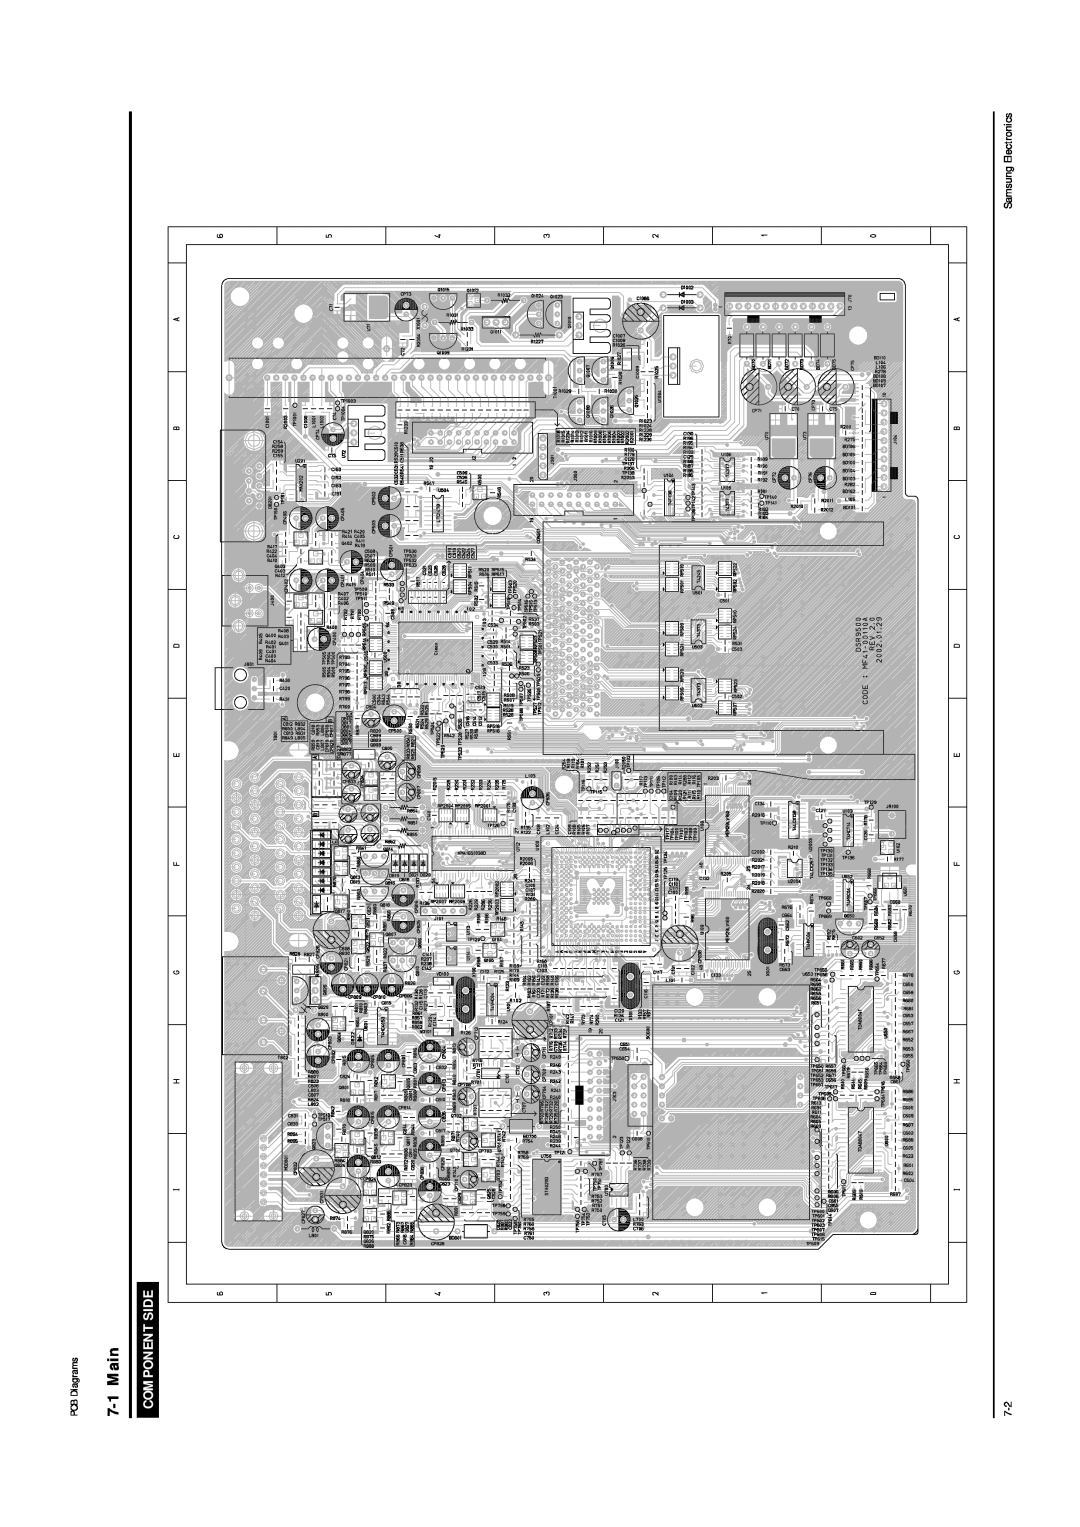 Samsung DSR9500 CI, DSR9500 FTA, DSR9500EMVIA, DSR9500VIACI operating instructions Main, Component Side 